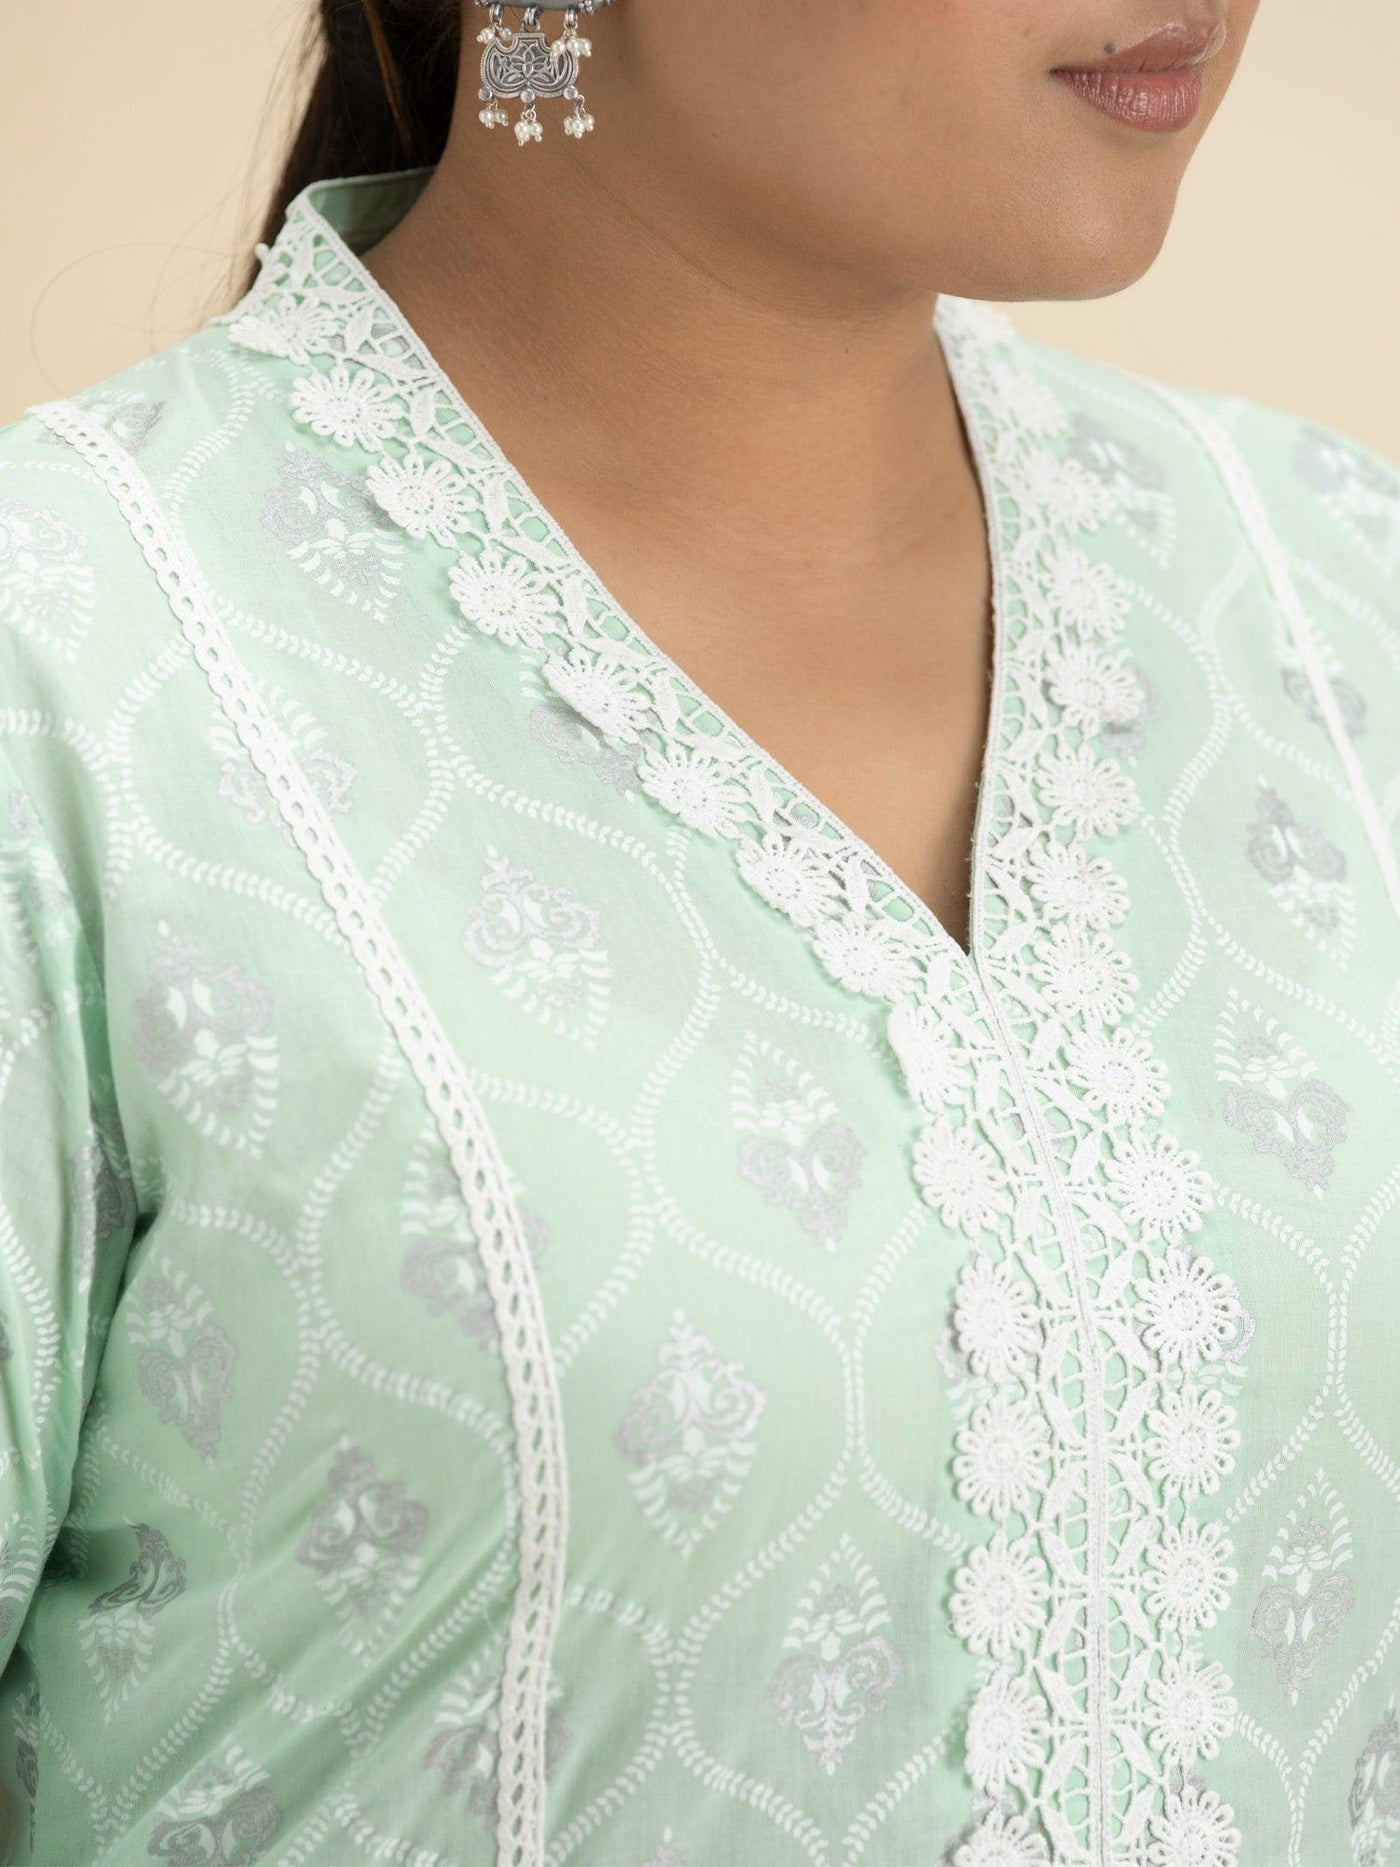 Plus Size Green Printed Cotton Kurta Set - Libas